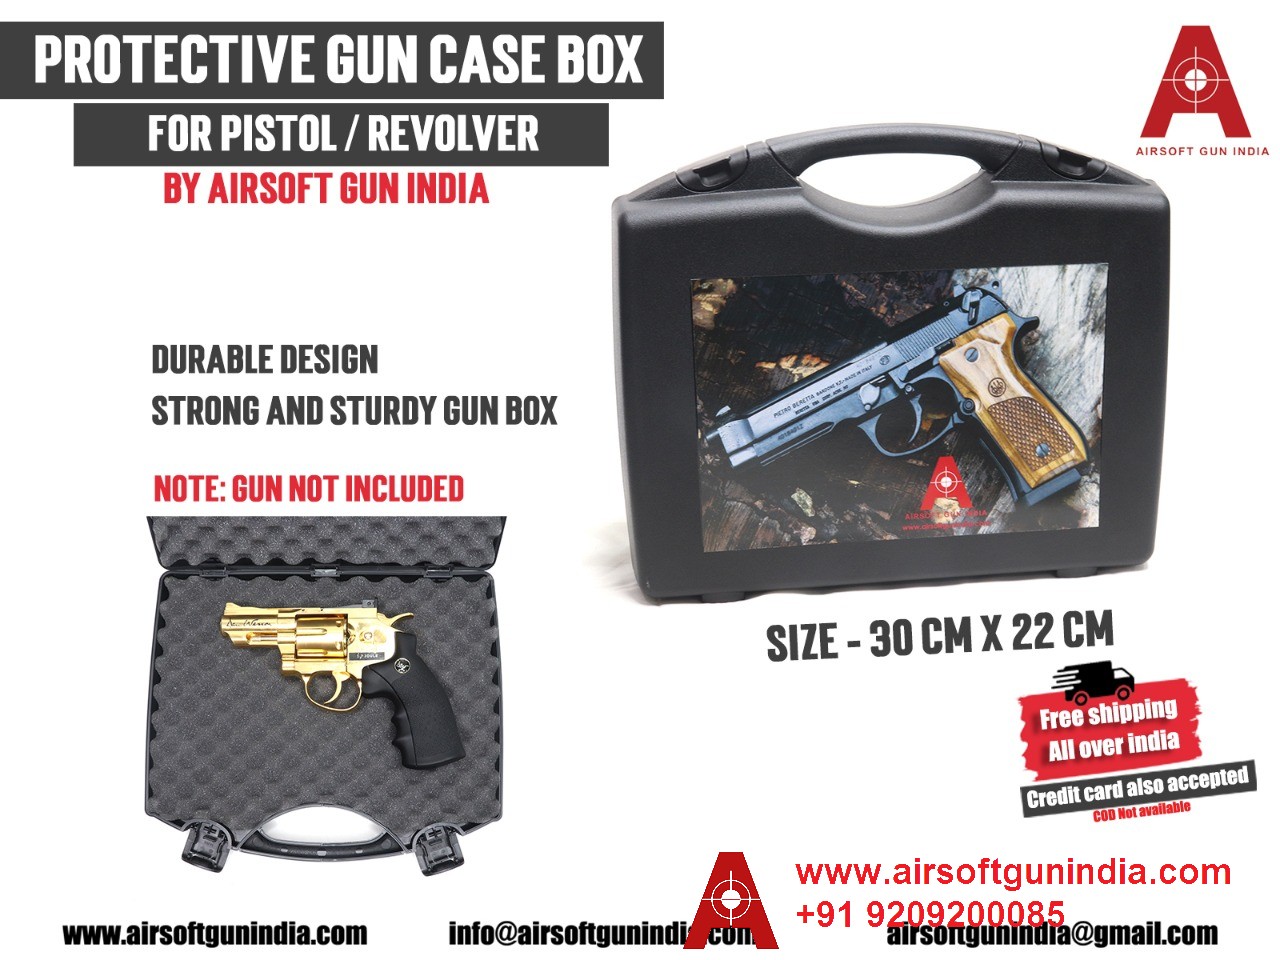 PISTOL / REVOLVER PROTECTIVE GUN CASE BOX BY AIRSOFT GUN INDIA